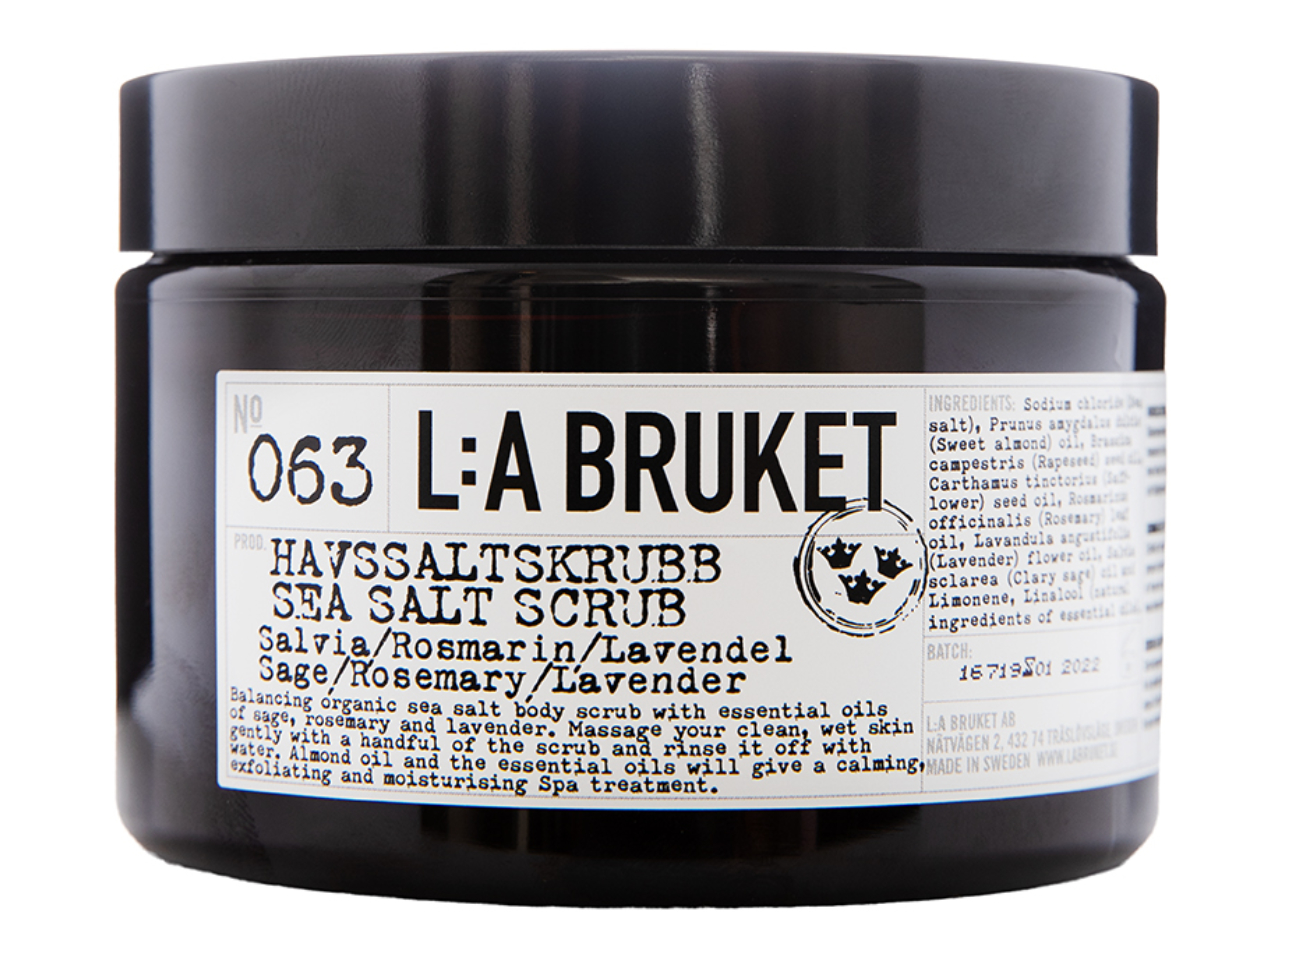 063 Sea Salt Scrub Sage/Rosemary/Lavender 420 g